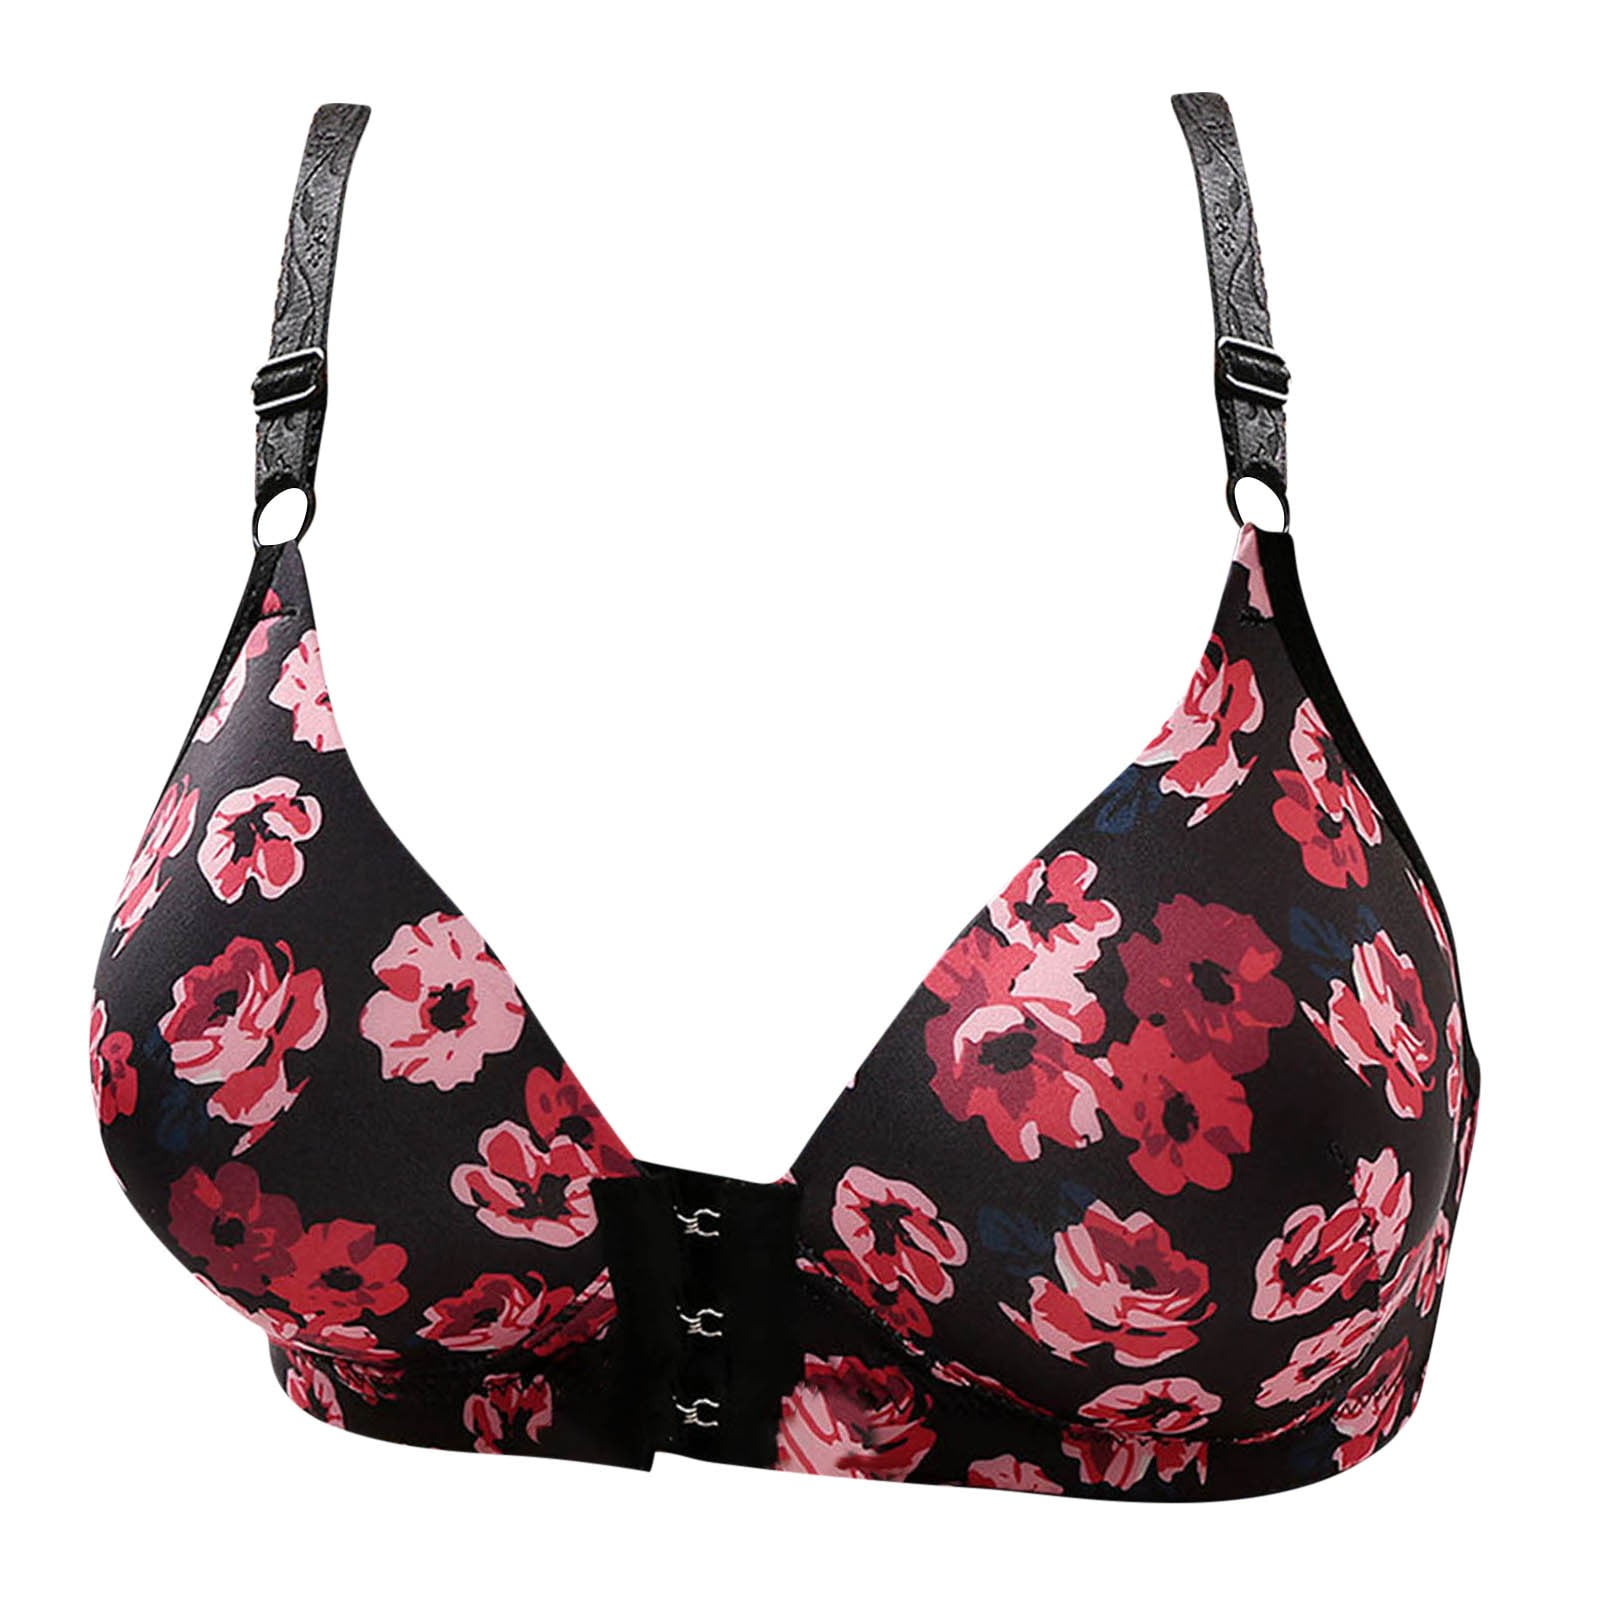 HAPIMO Everyday Bras for Women Stretch Underwear Flower Print